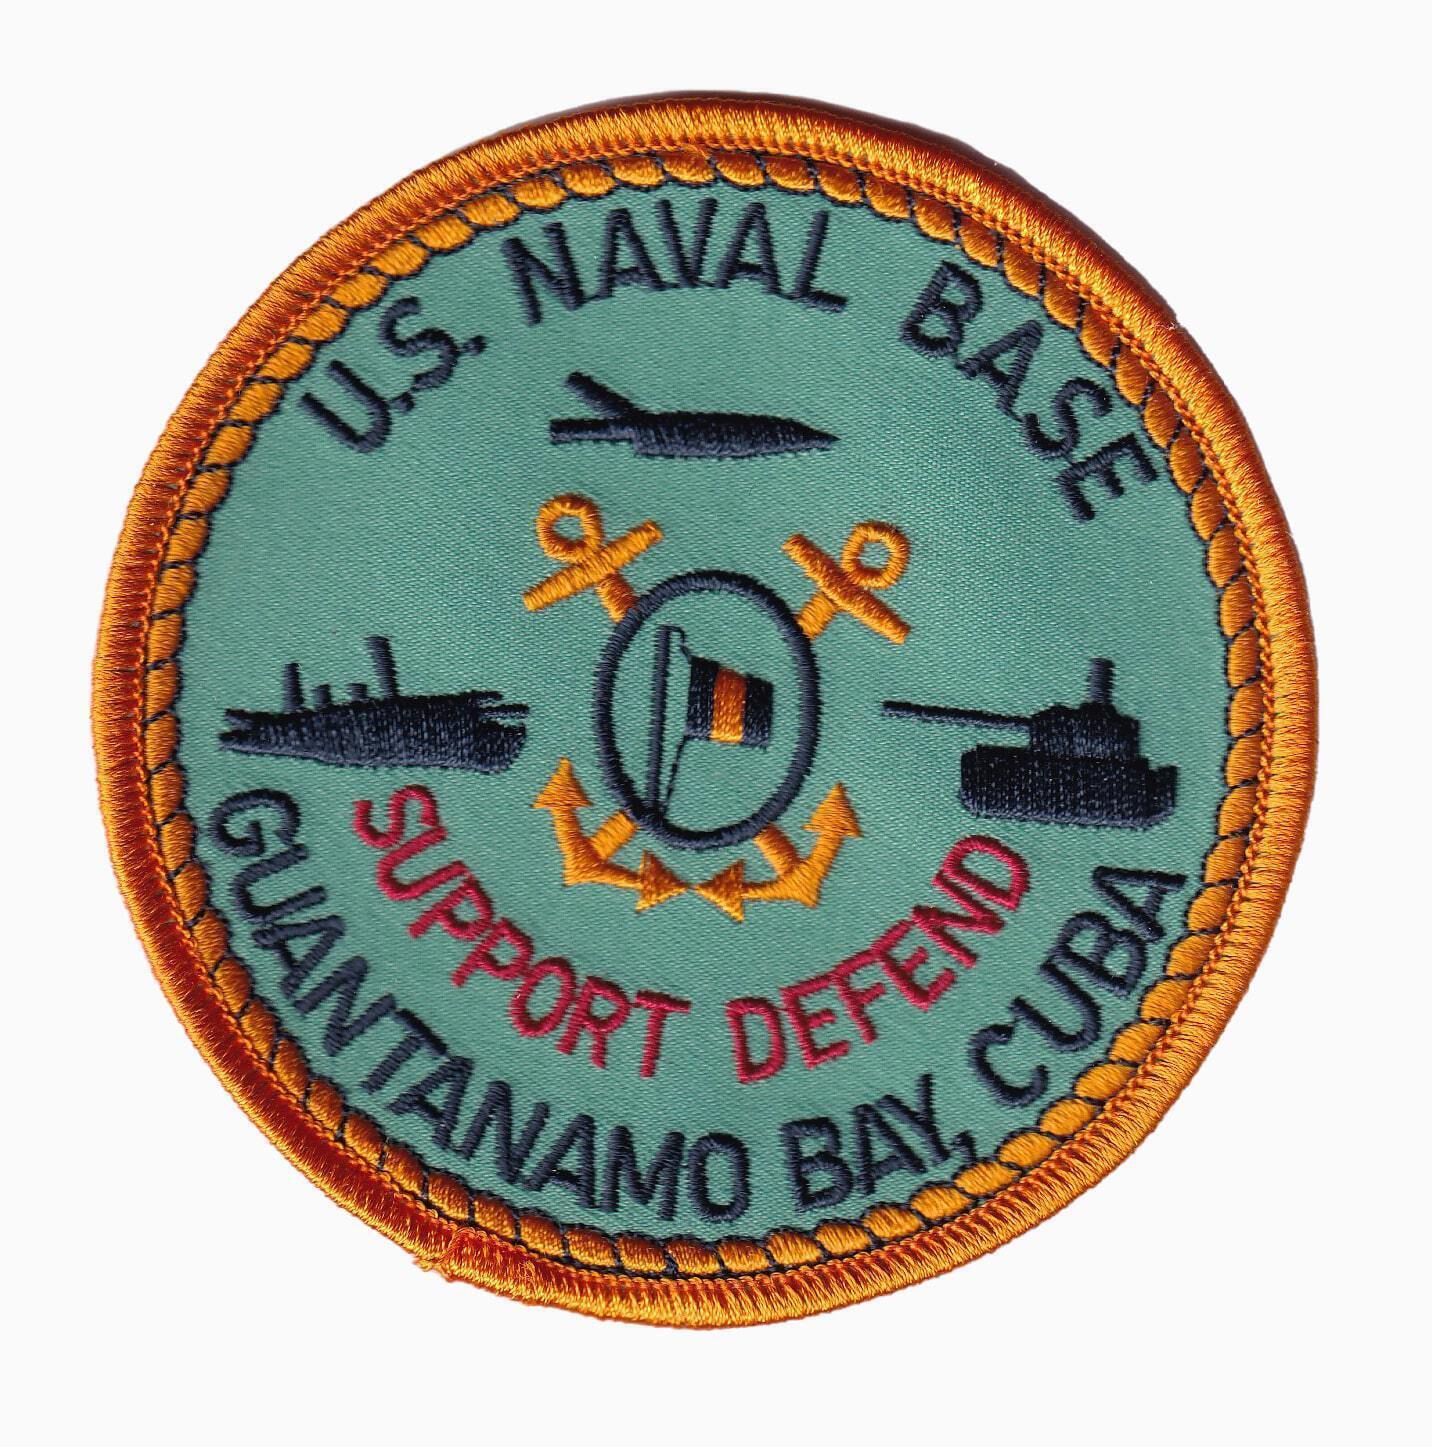 US Naval Base Guantanamo Bay Patch - Sew on, 4\